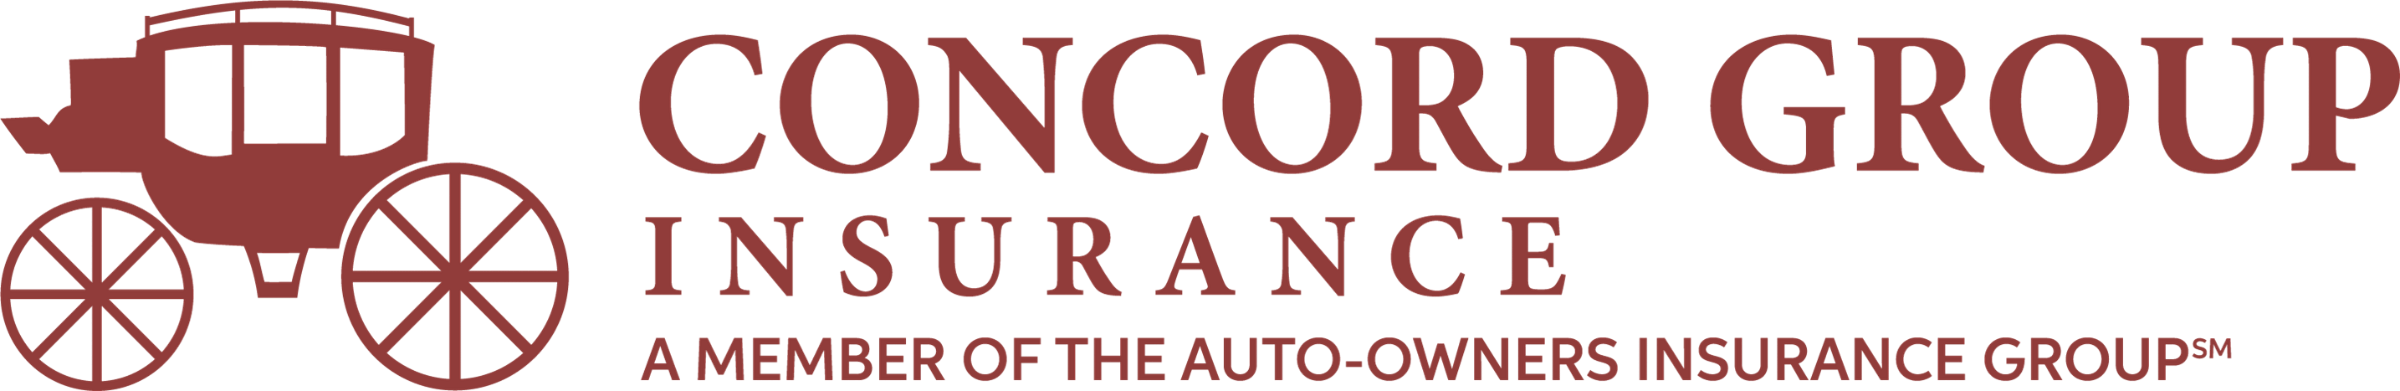 CONCORD GROUP - Paul & Dixon Insurance